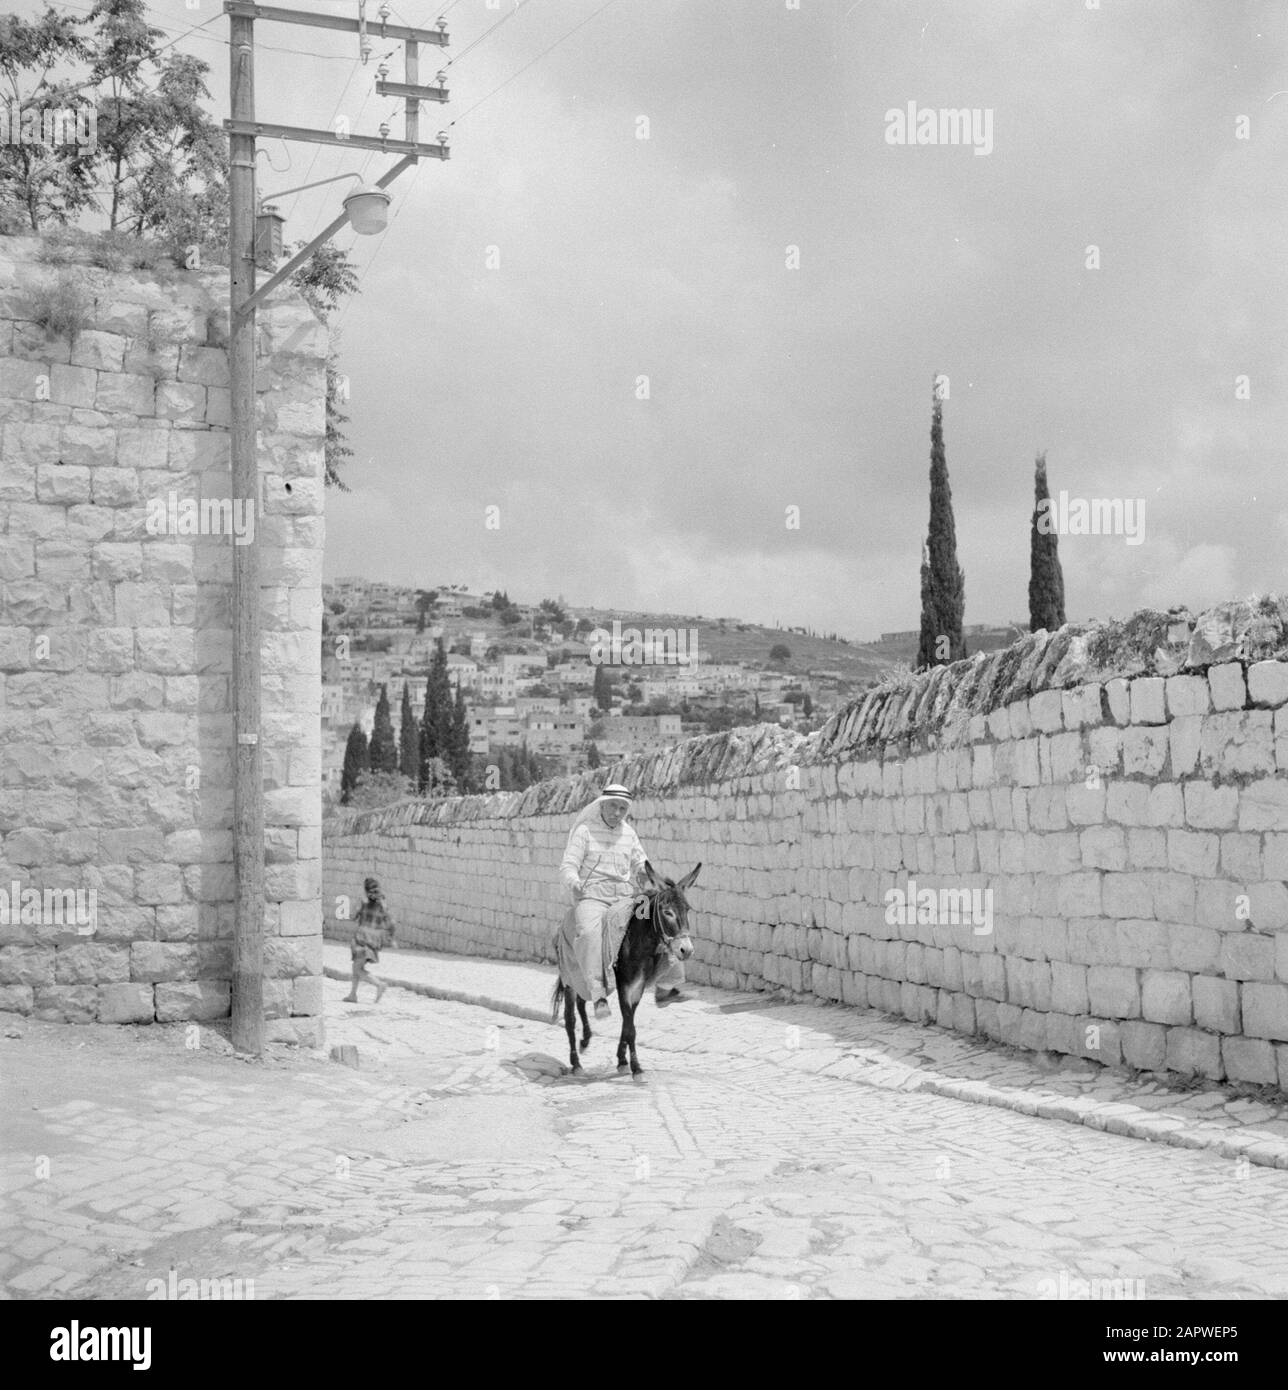 Israel: Nazareth  Man on a donkey, riding along a wall Date: undated Location: Galilee, Israel, Nazareth Keywords: donkeys, men, walls, street images Stock Photo